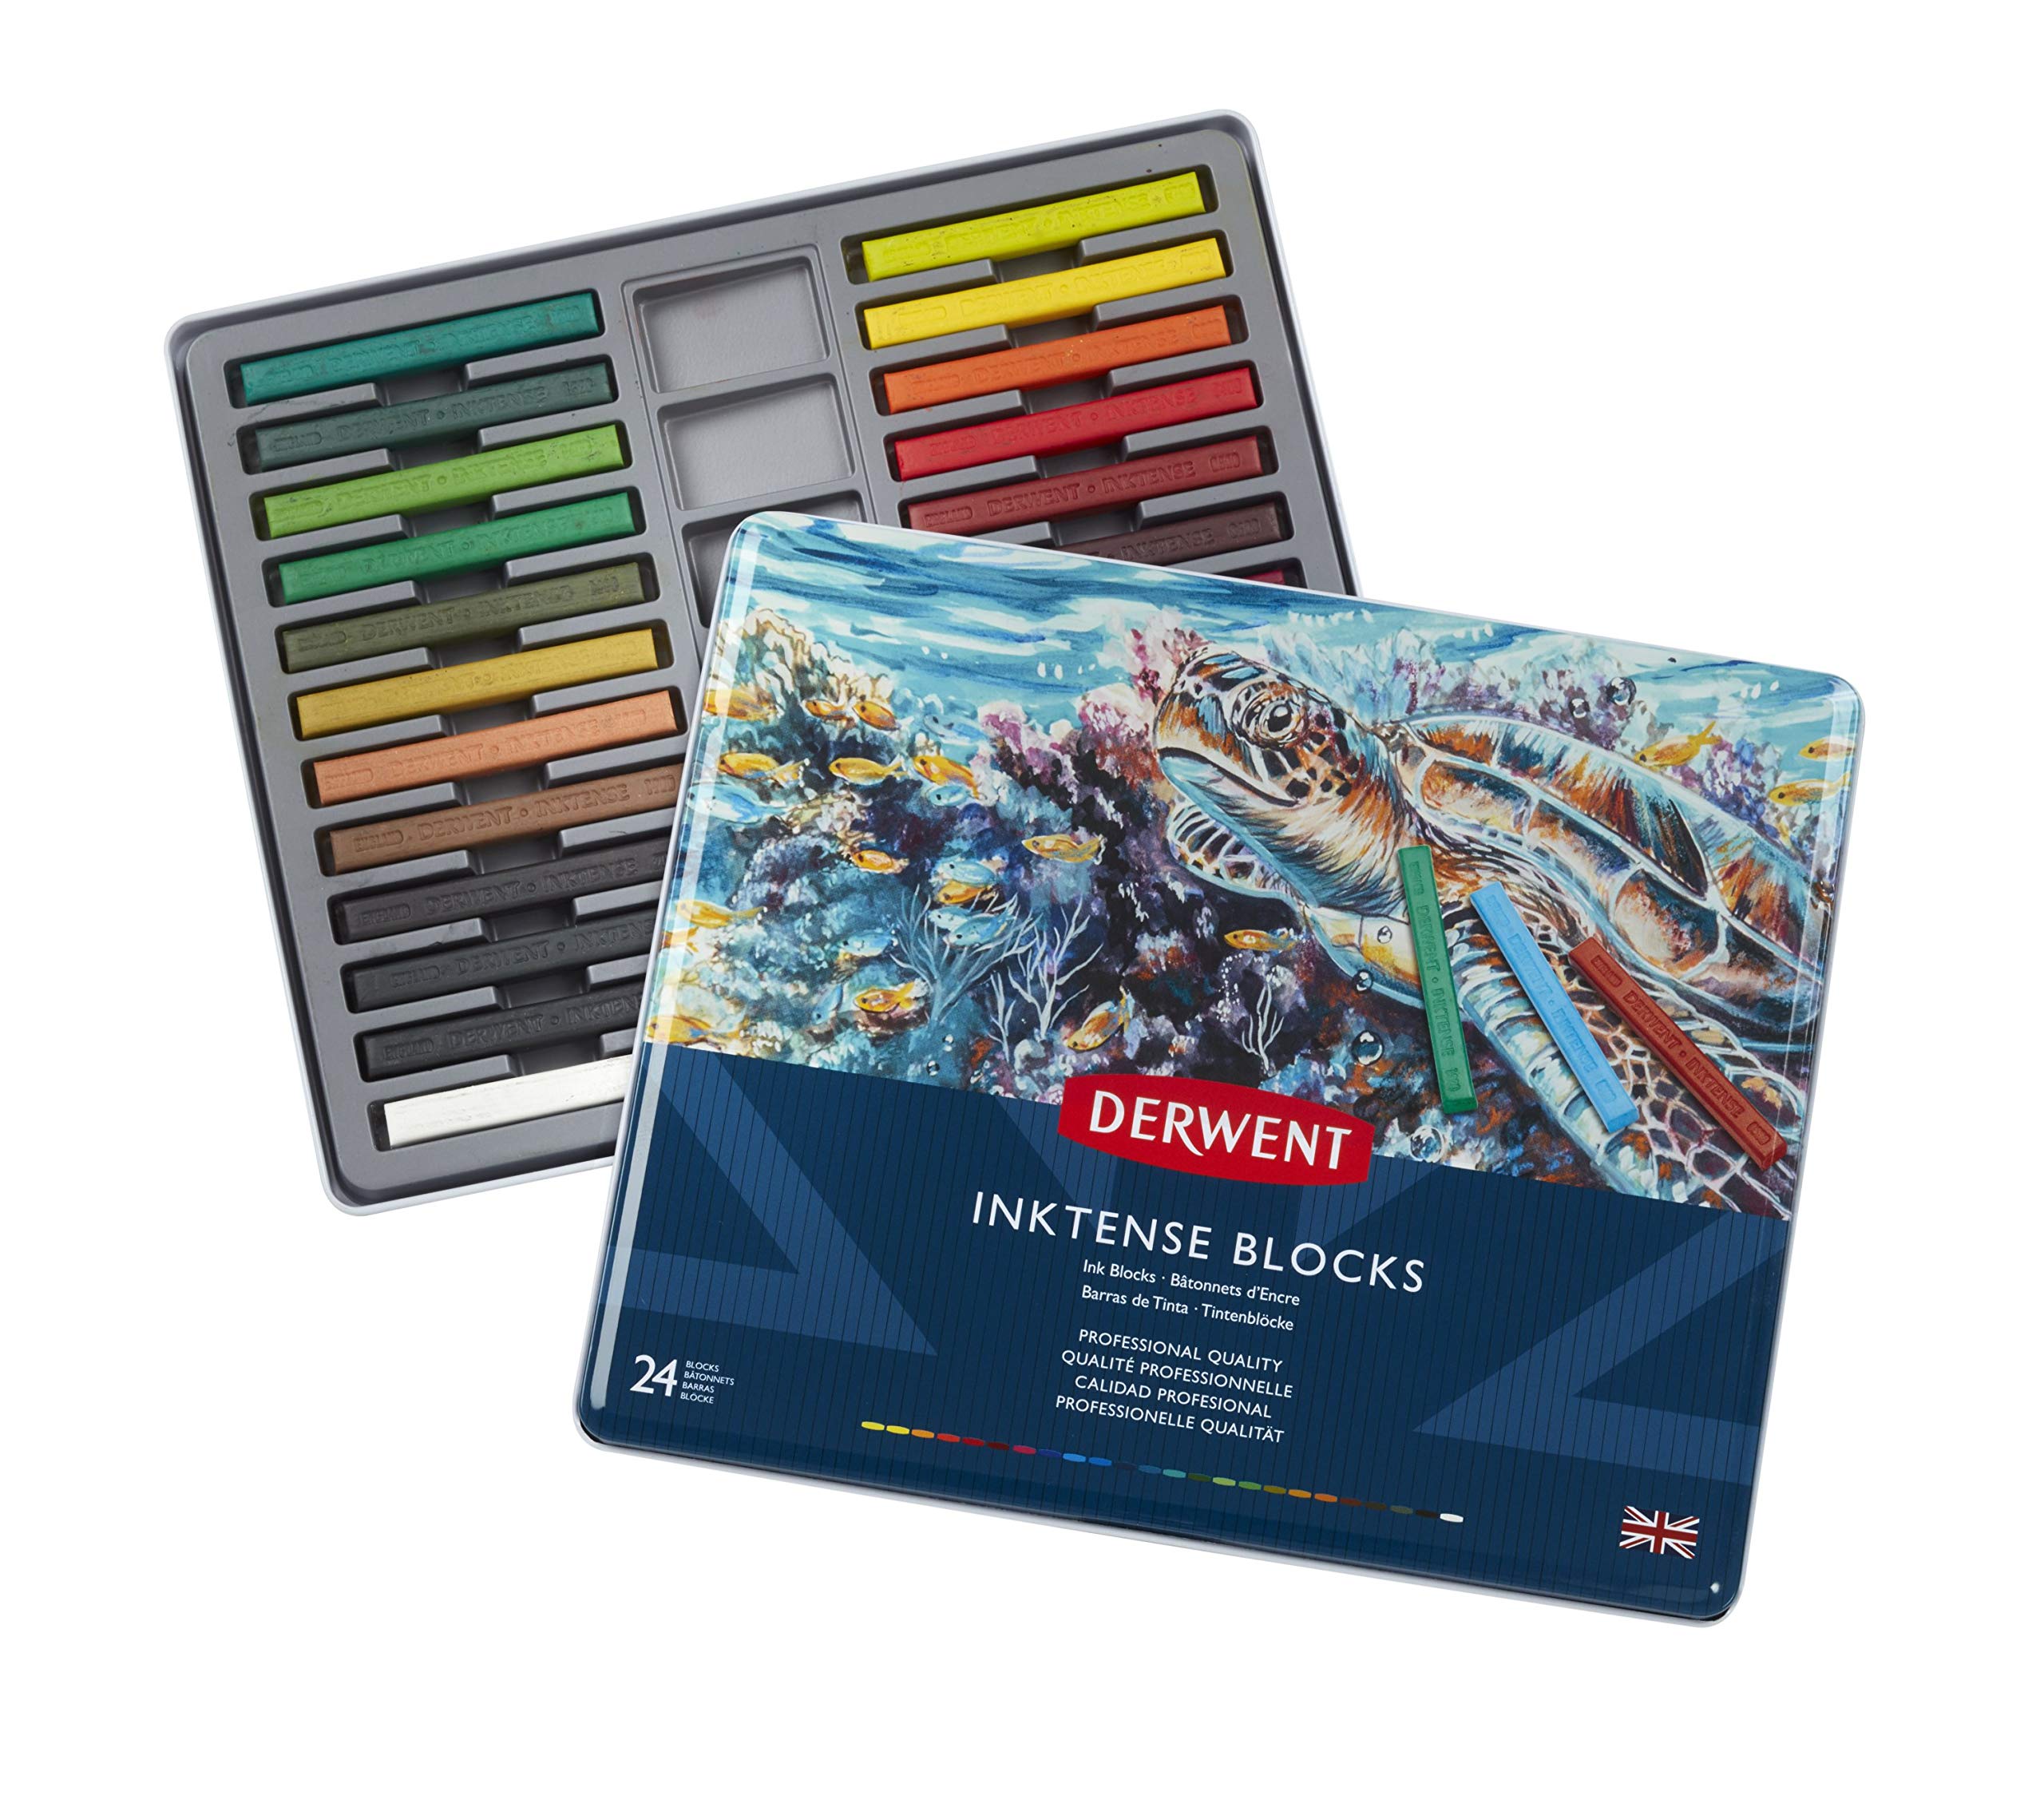 Derwent Inktense Pencil Set - Tin Box, Set of 24